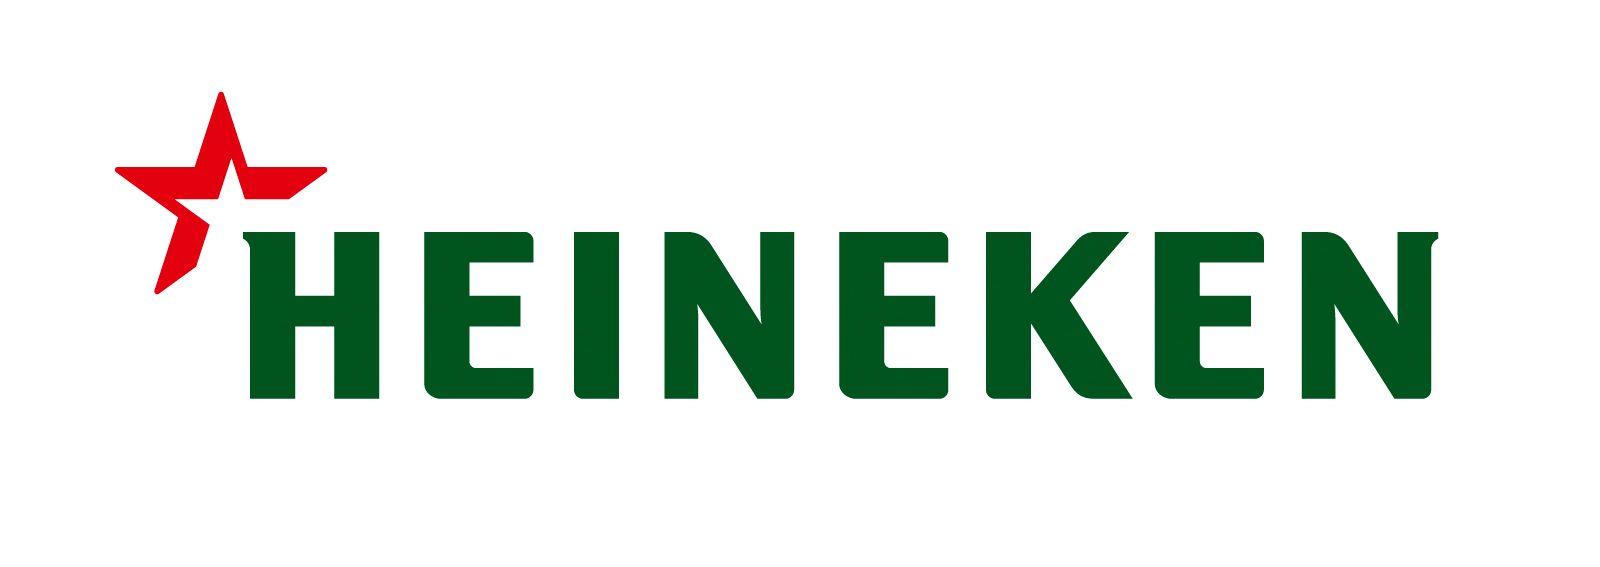 Green Corporate Logo - HEINEKEN's New Corporate Logo Could Be Blue